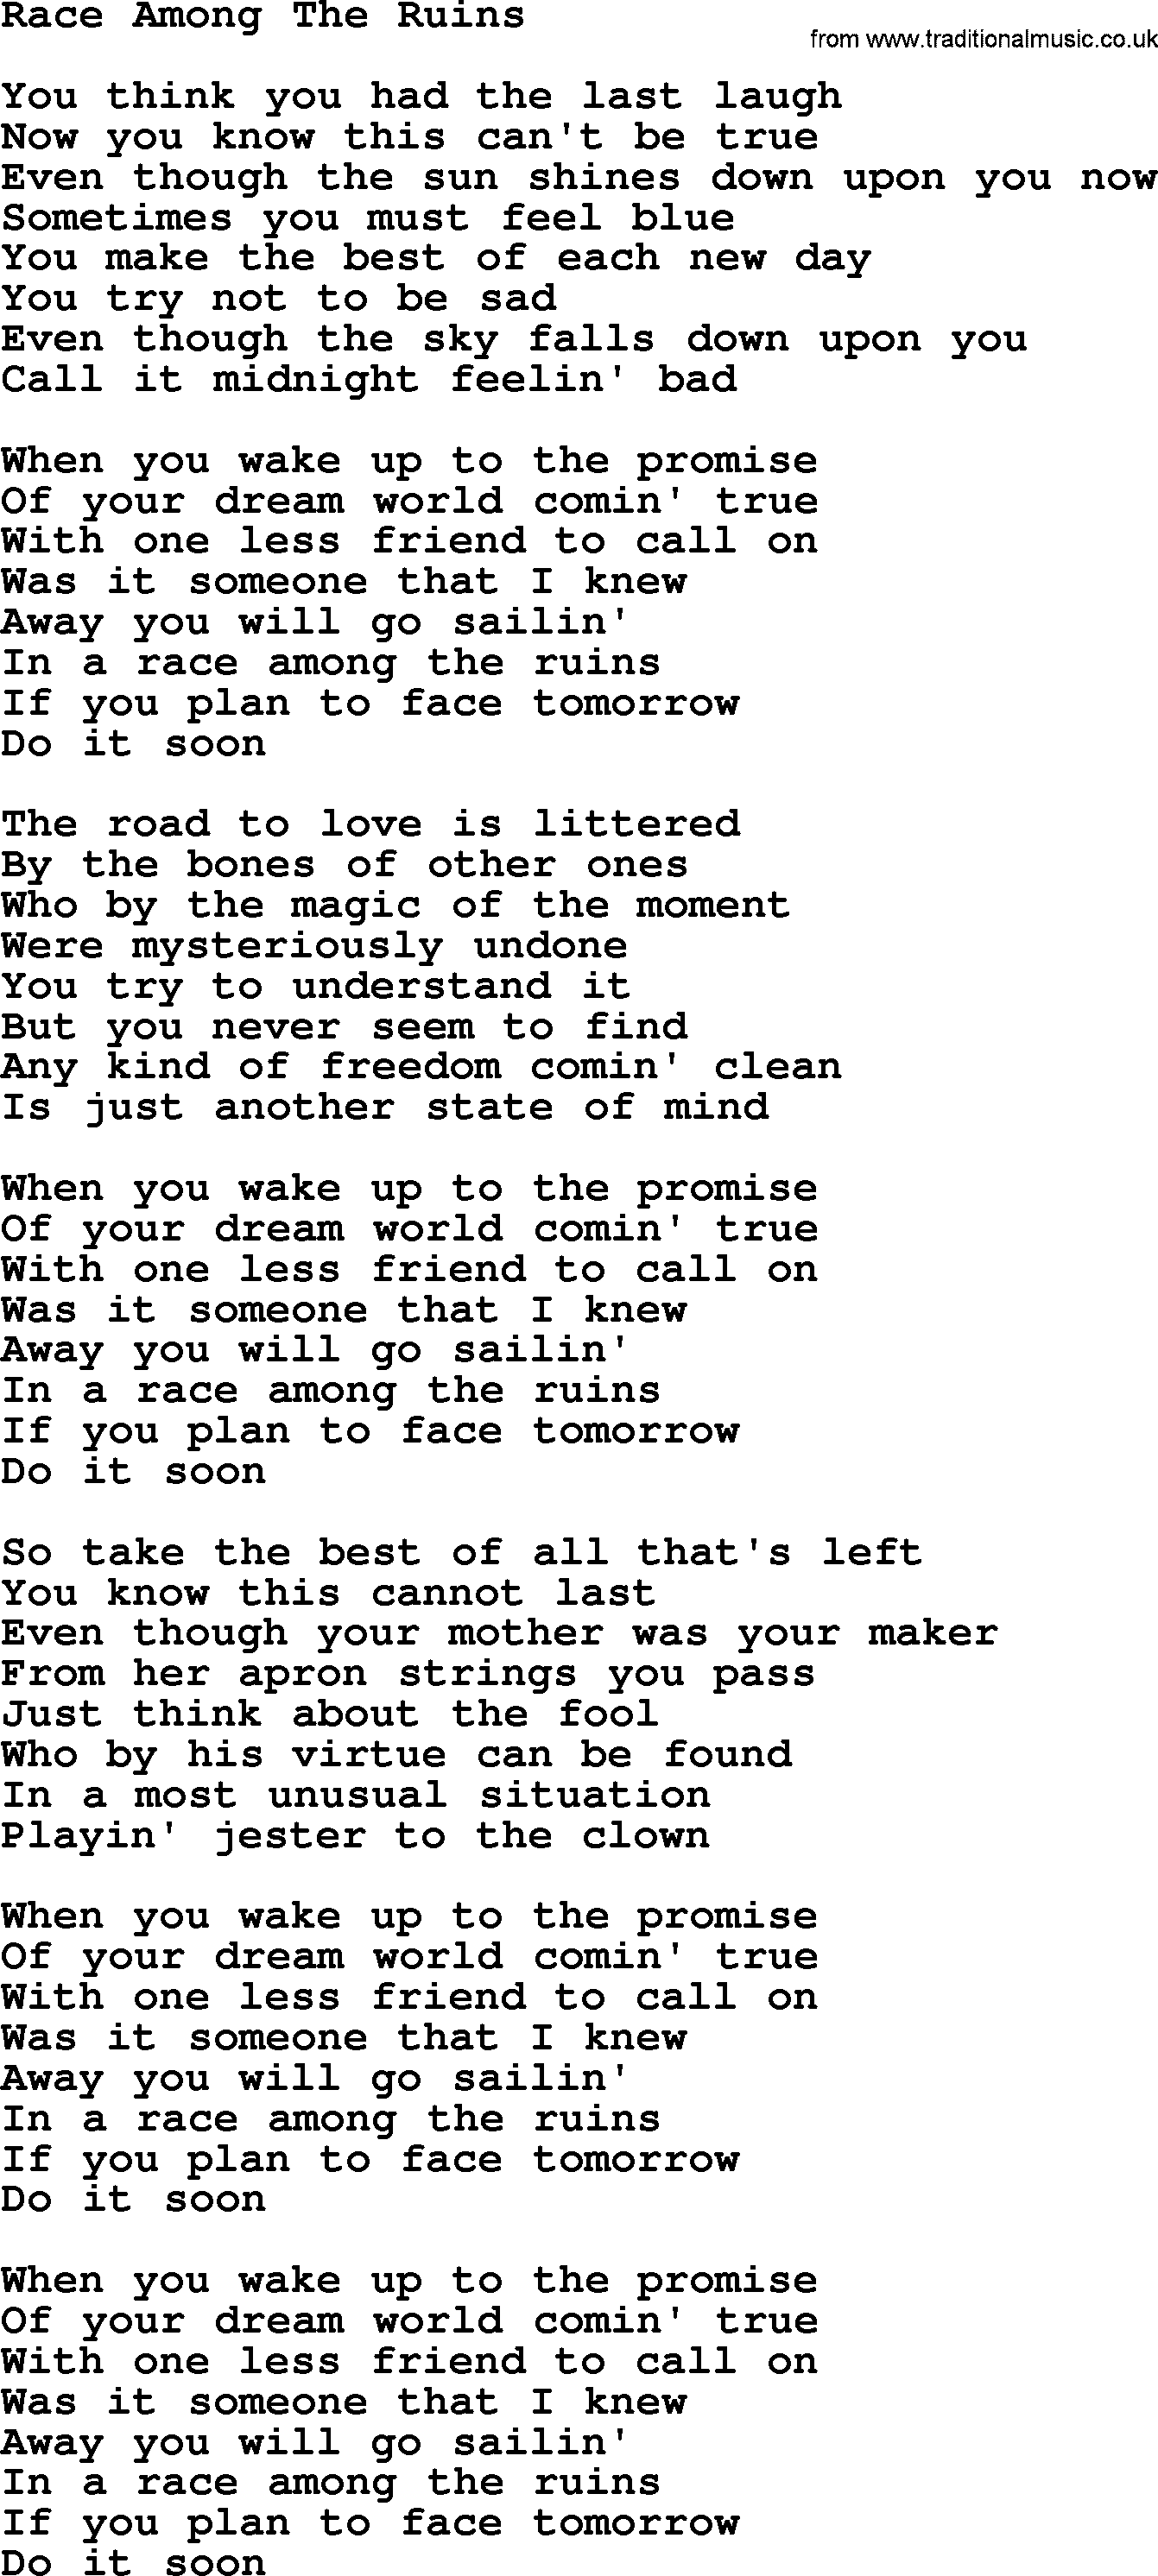 Gordon Lightfoot song Race Among The Ruins, lyrics